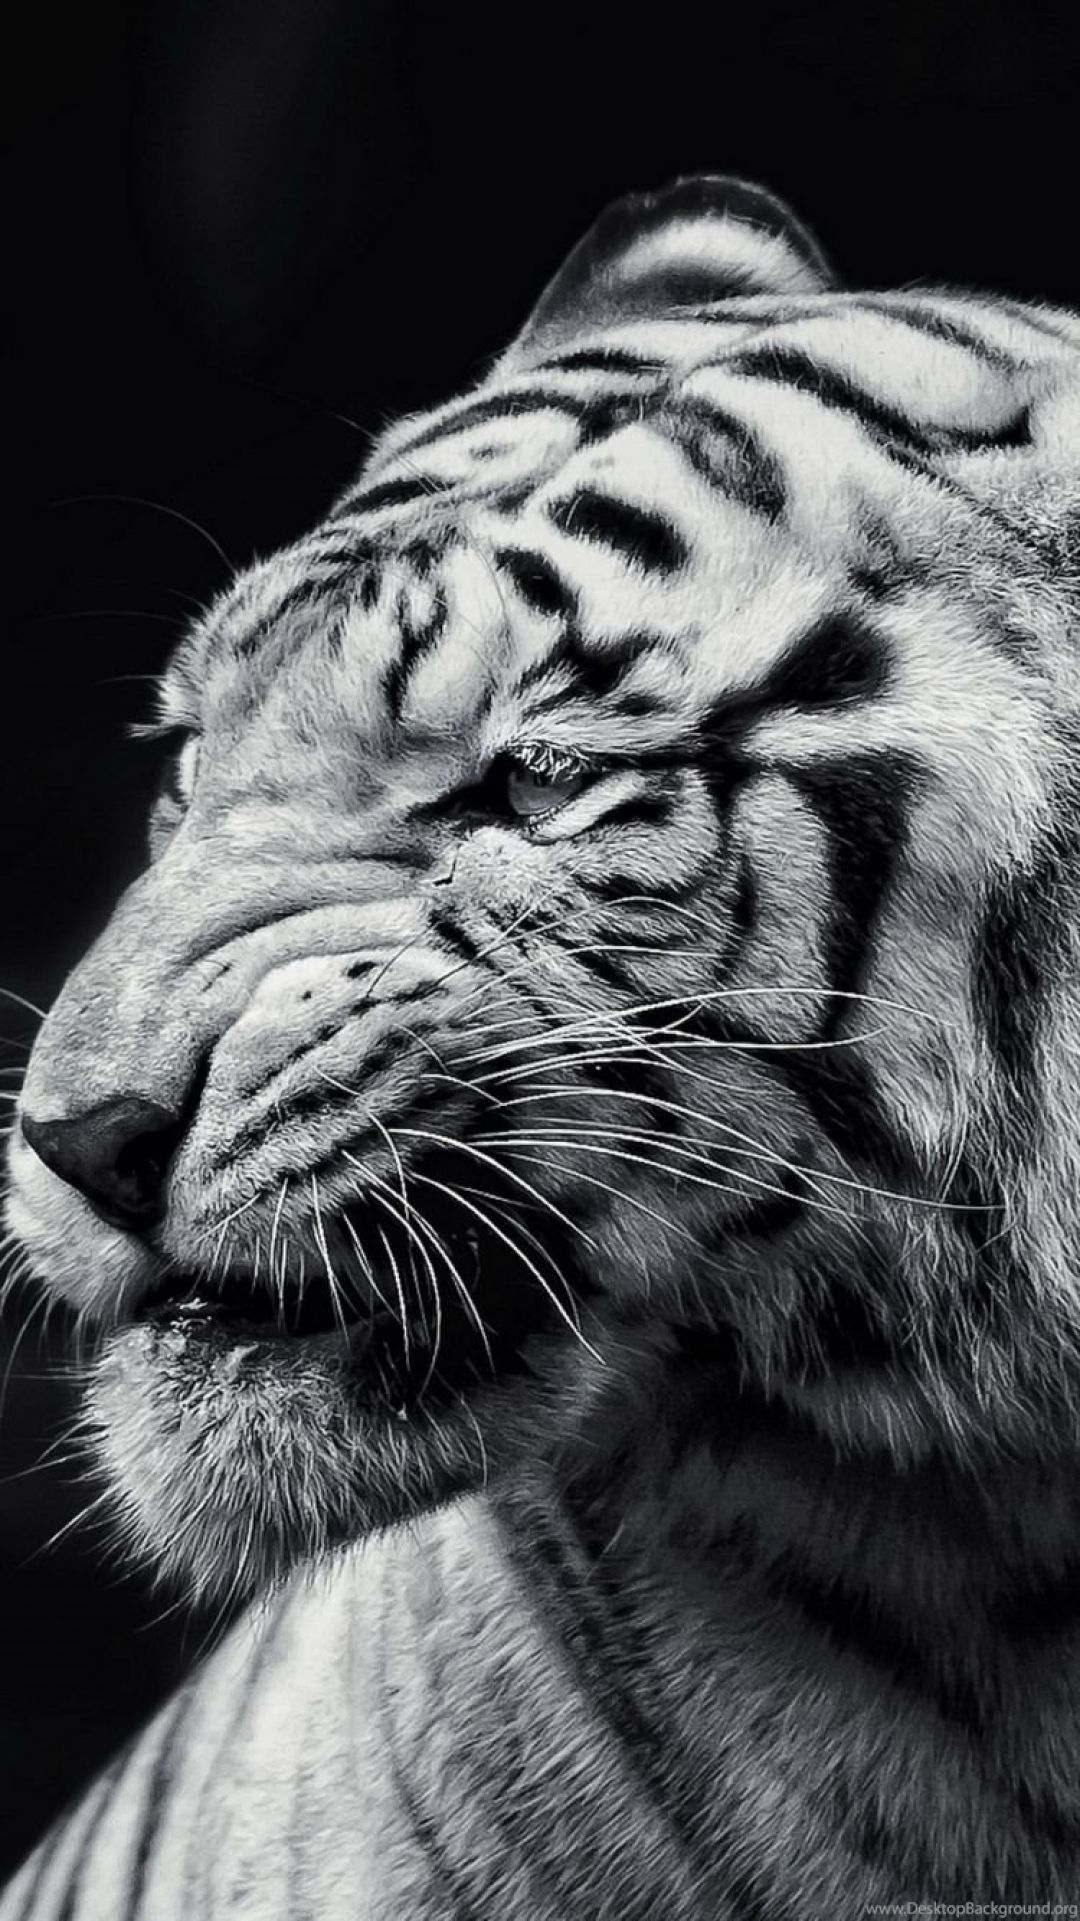 Tiger iPhone HD Wallpapers - Wallpaper Cave